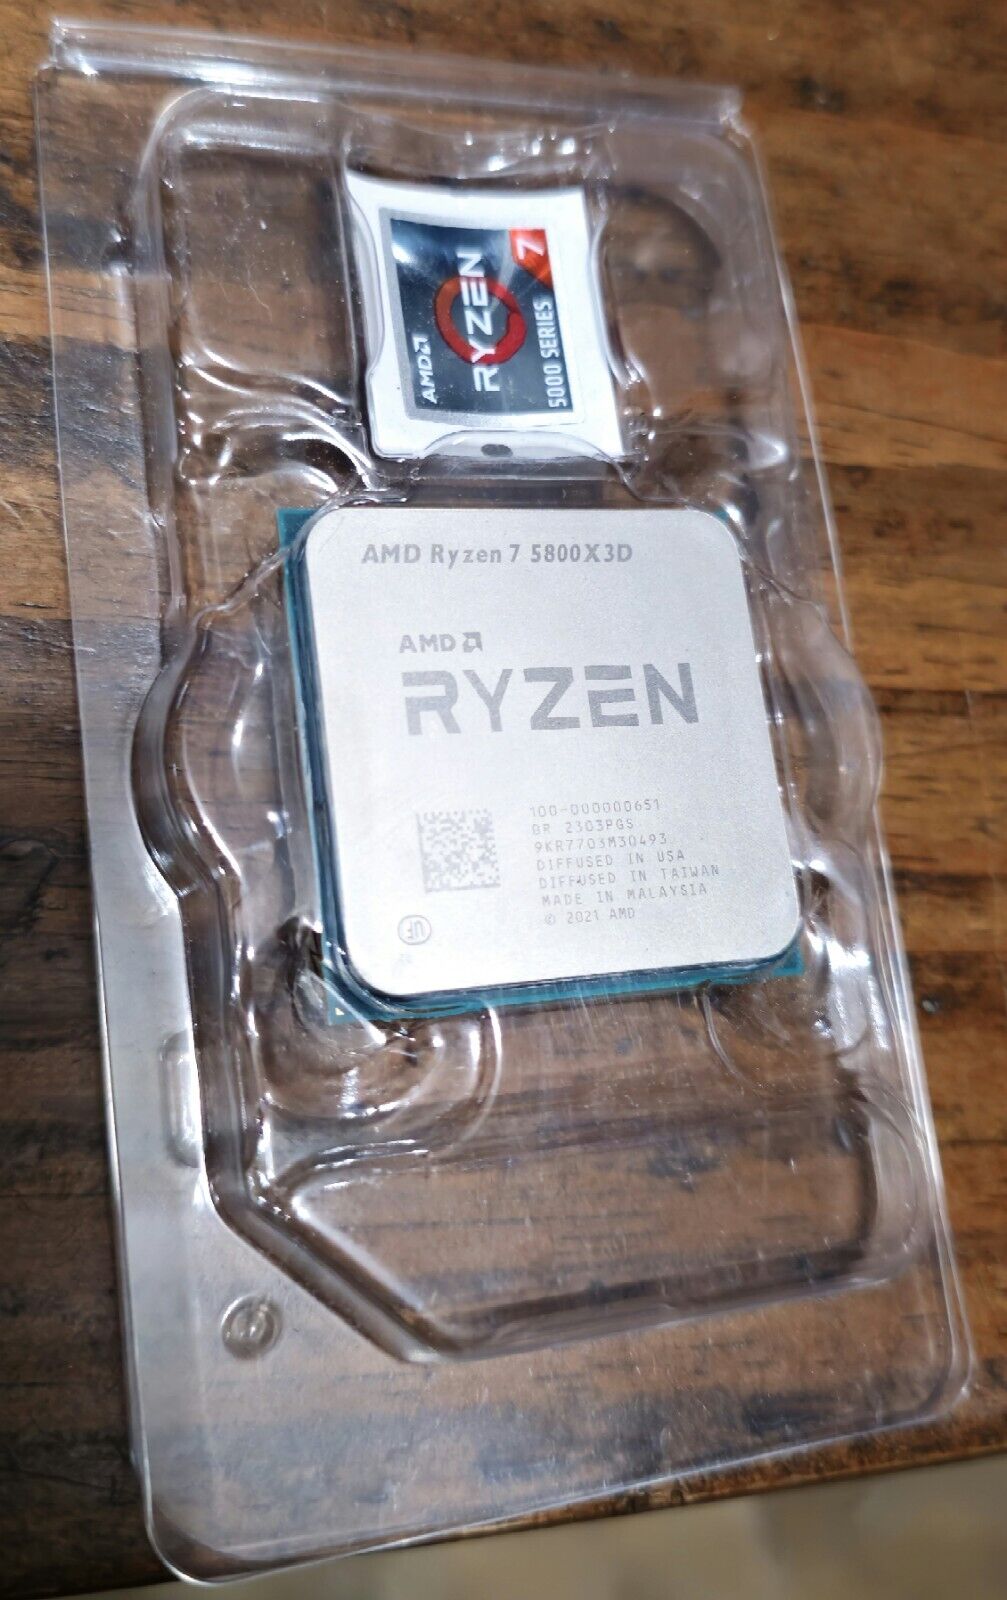 AMD Ryzen 7 5800X3D Processor (4.5 GHz, 8 Cores, Socket AM4)